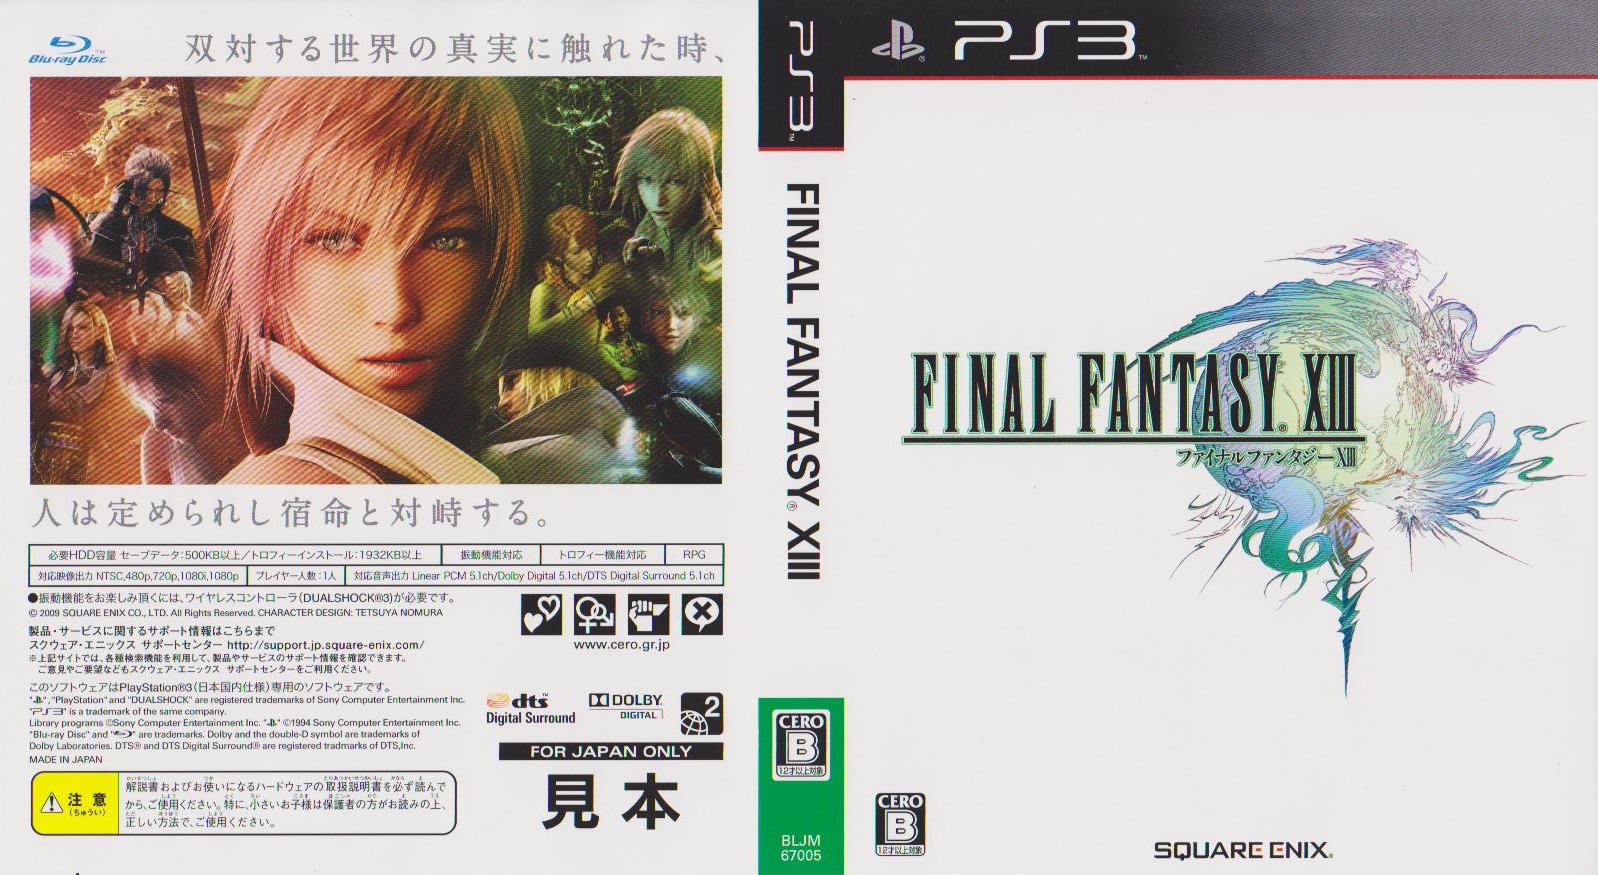 「FINAL FANTASY XIII」 のパッケージ - ゲーム新情報